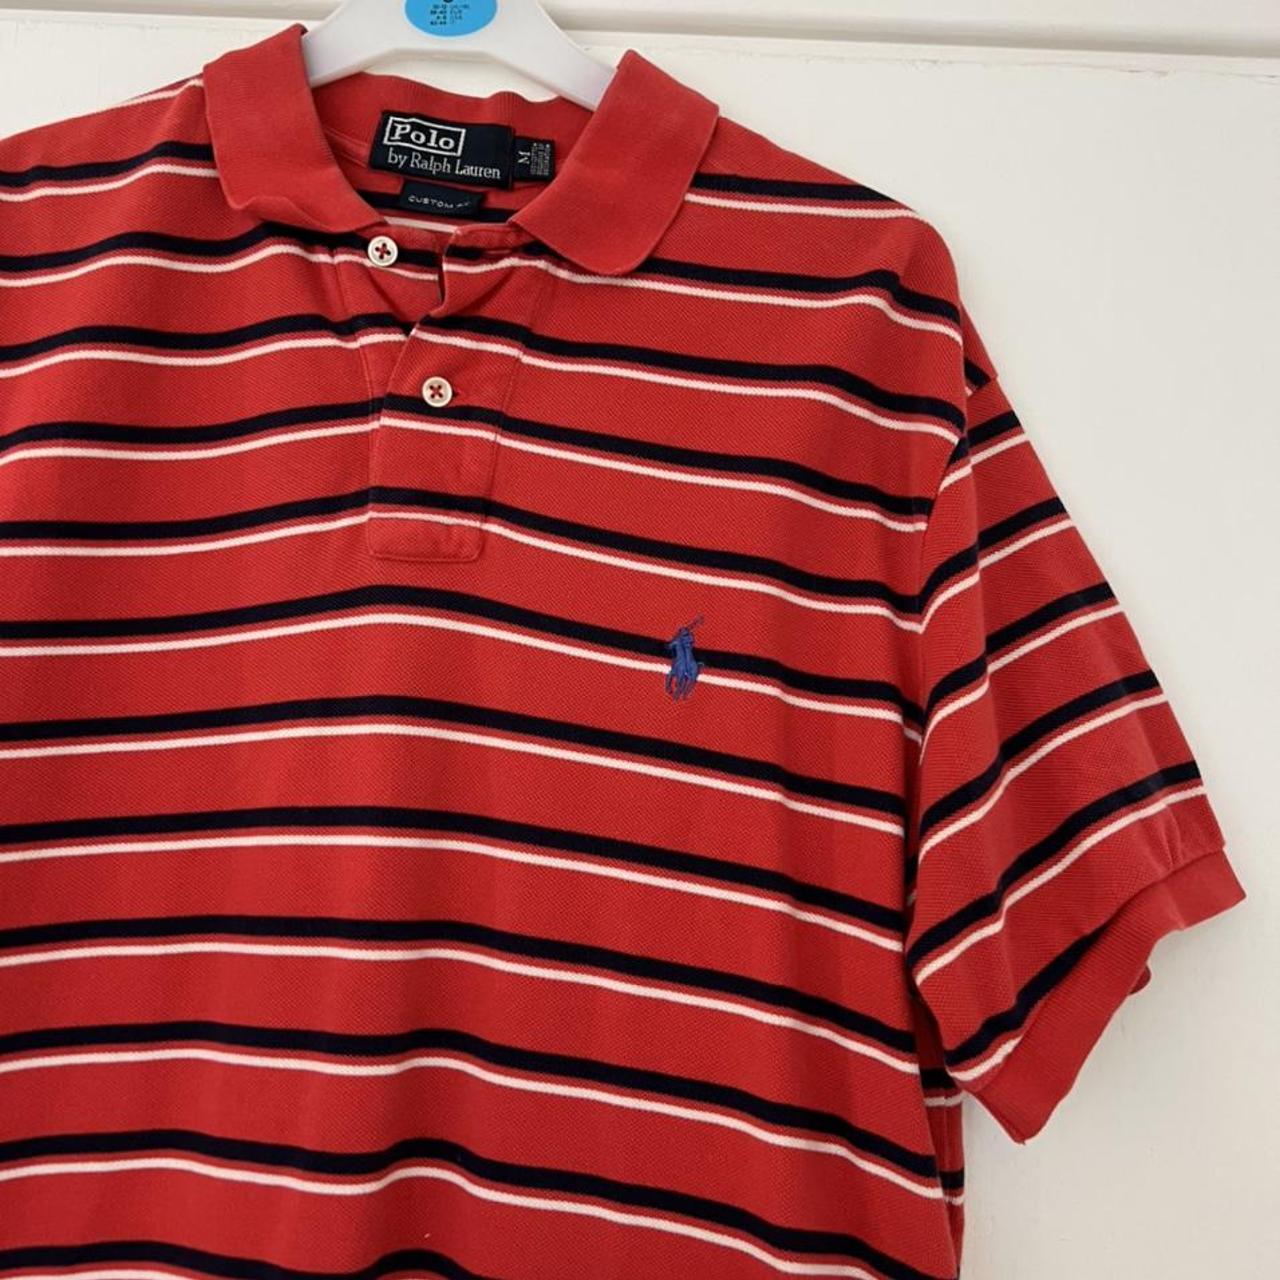 Vintage Ralph Lauren polo shirt - red striped - Depop